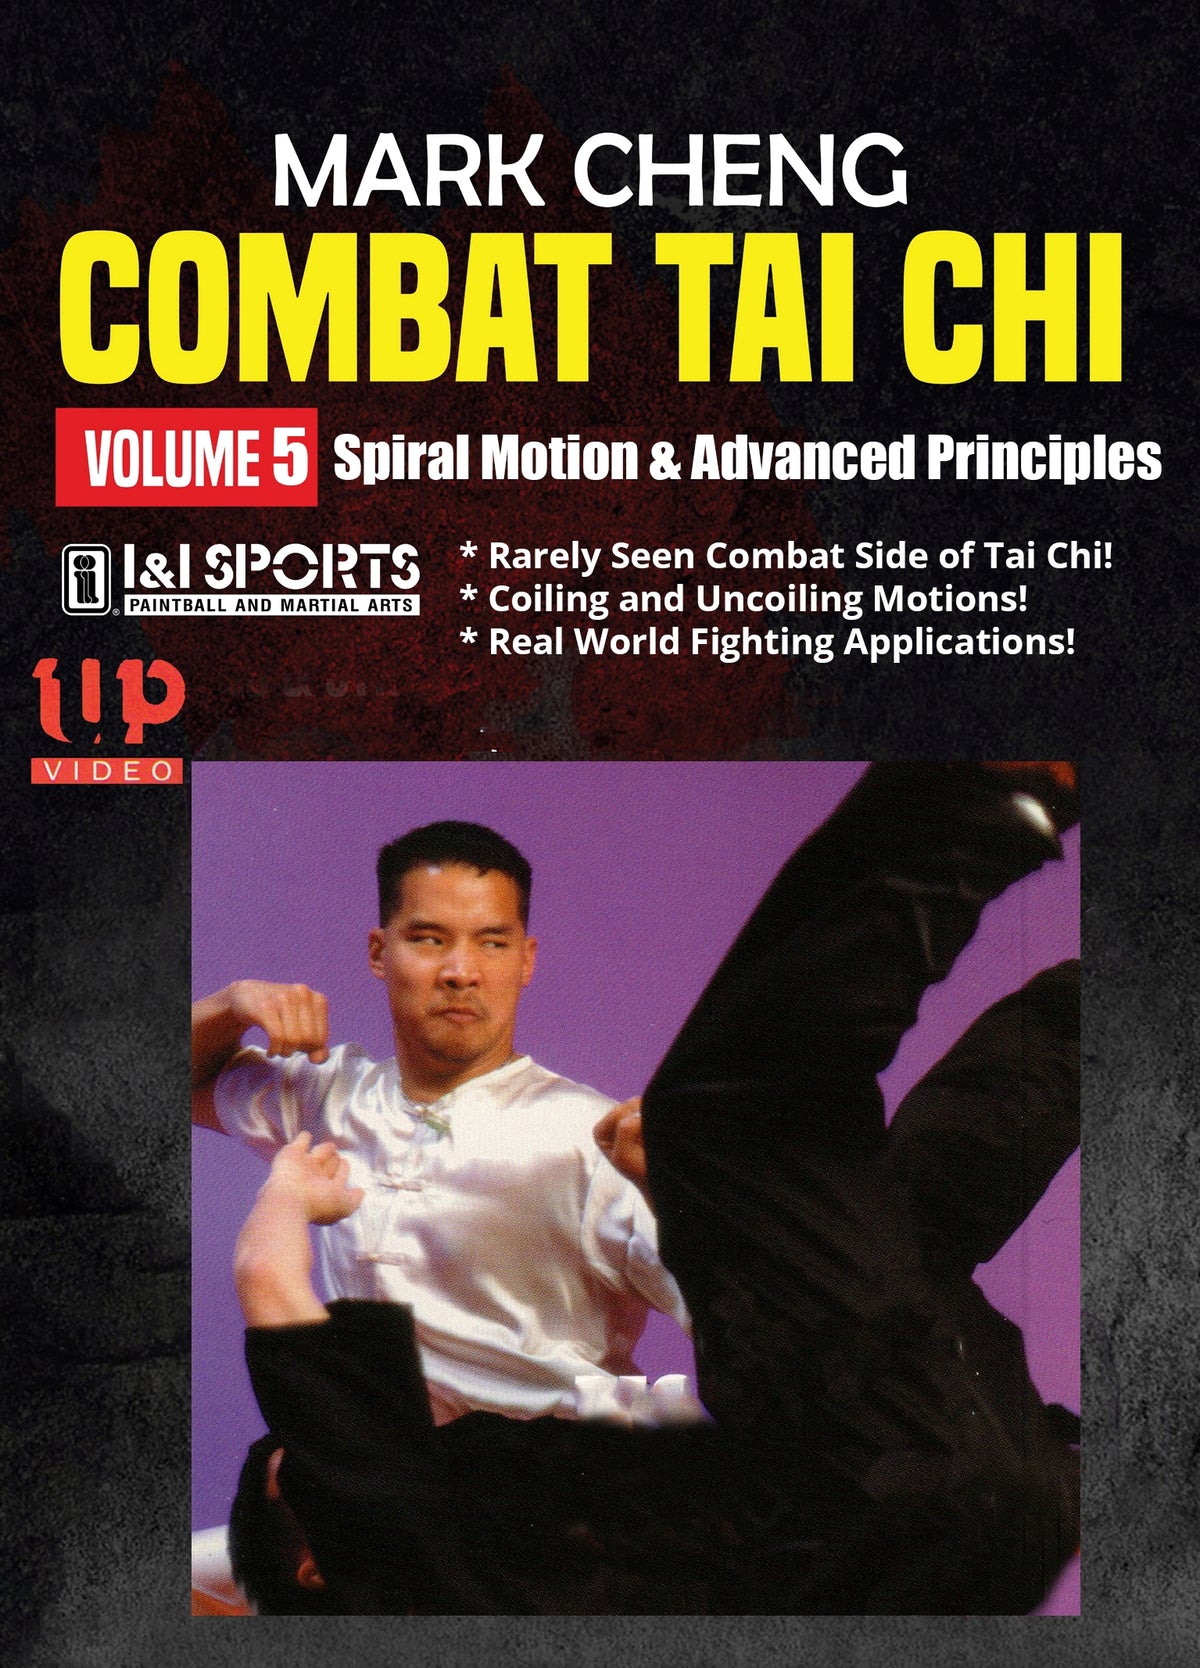 Combat Tai Chi #5 Spiral Motion & Advanced Principles Yang style DVD Mark Cheng